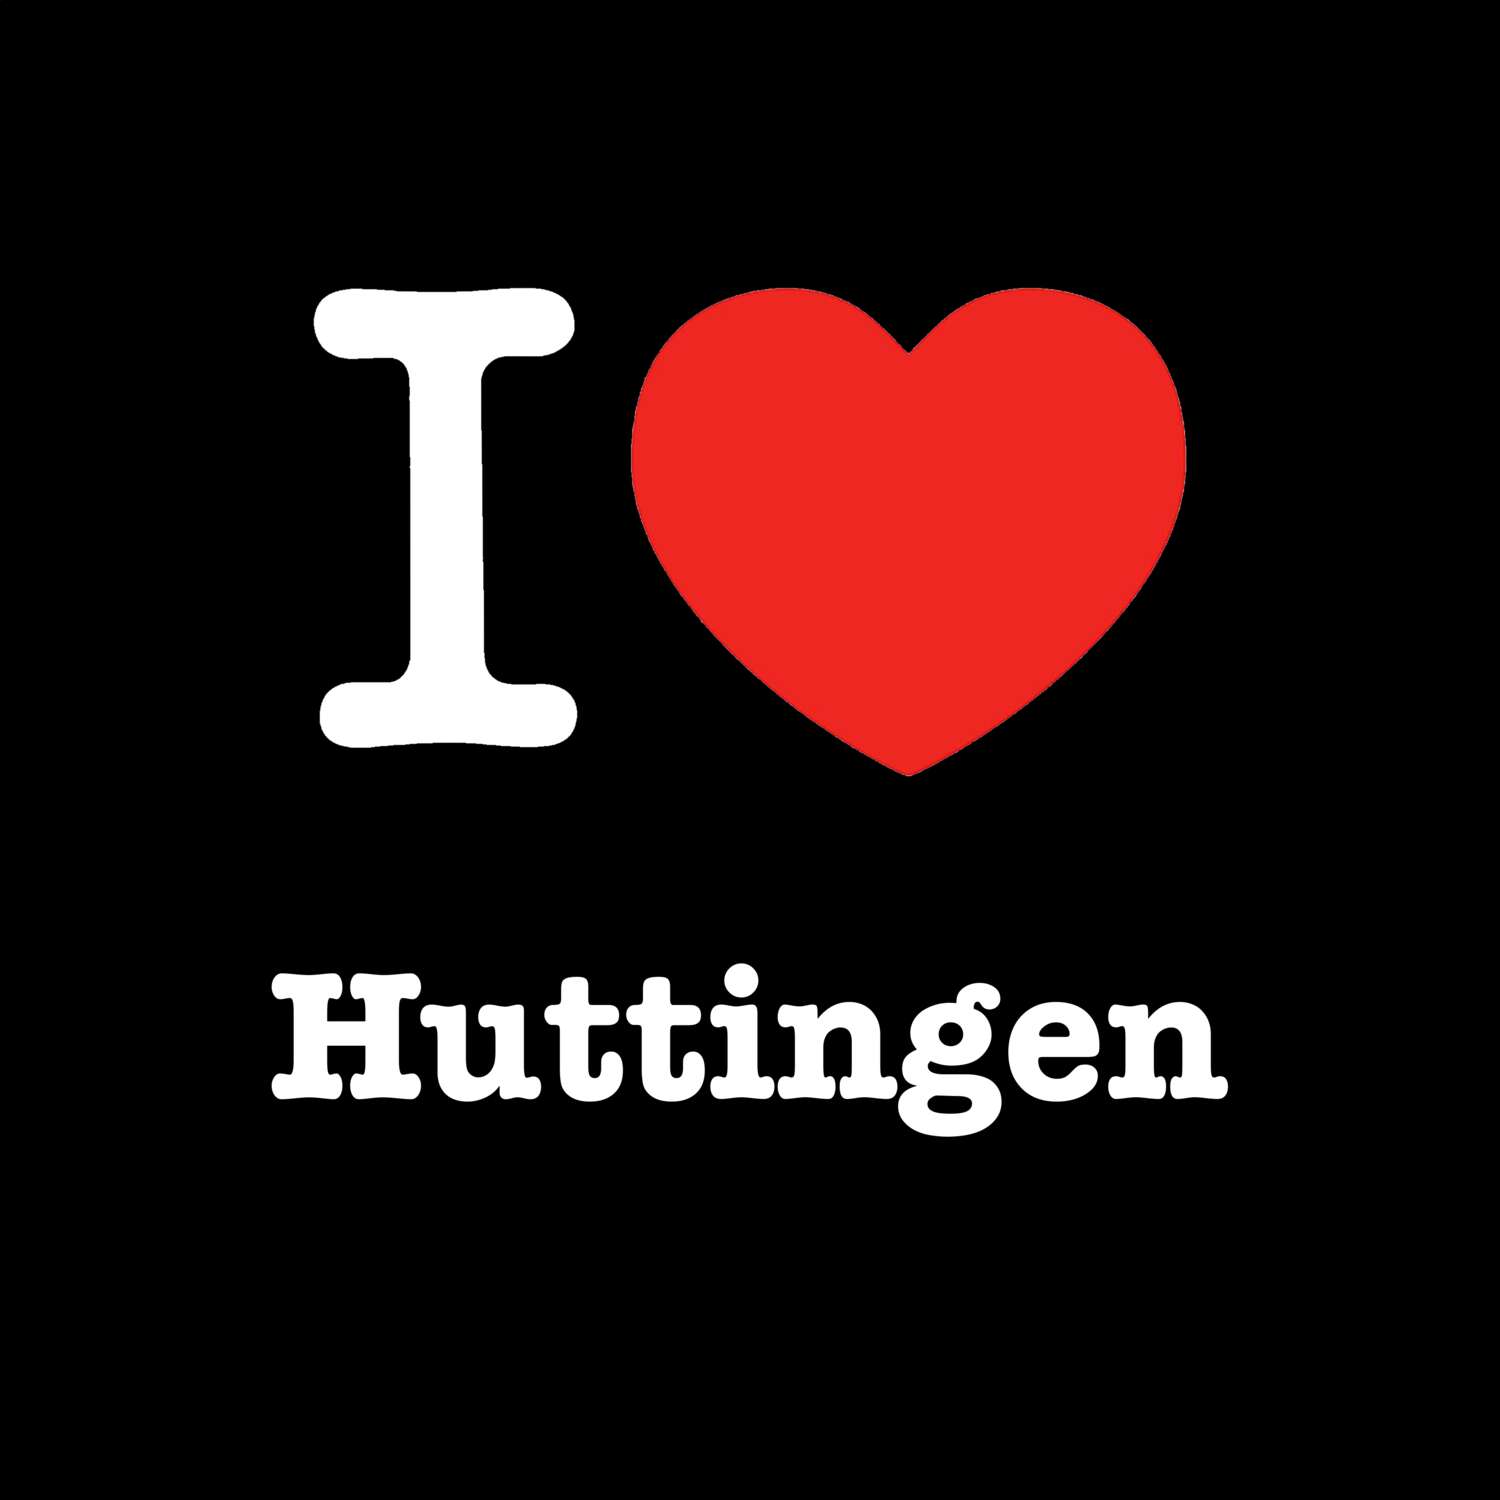 Huttingen T-Shirt »I love«